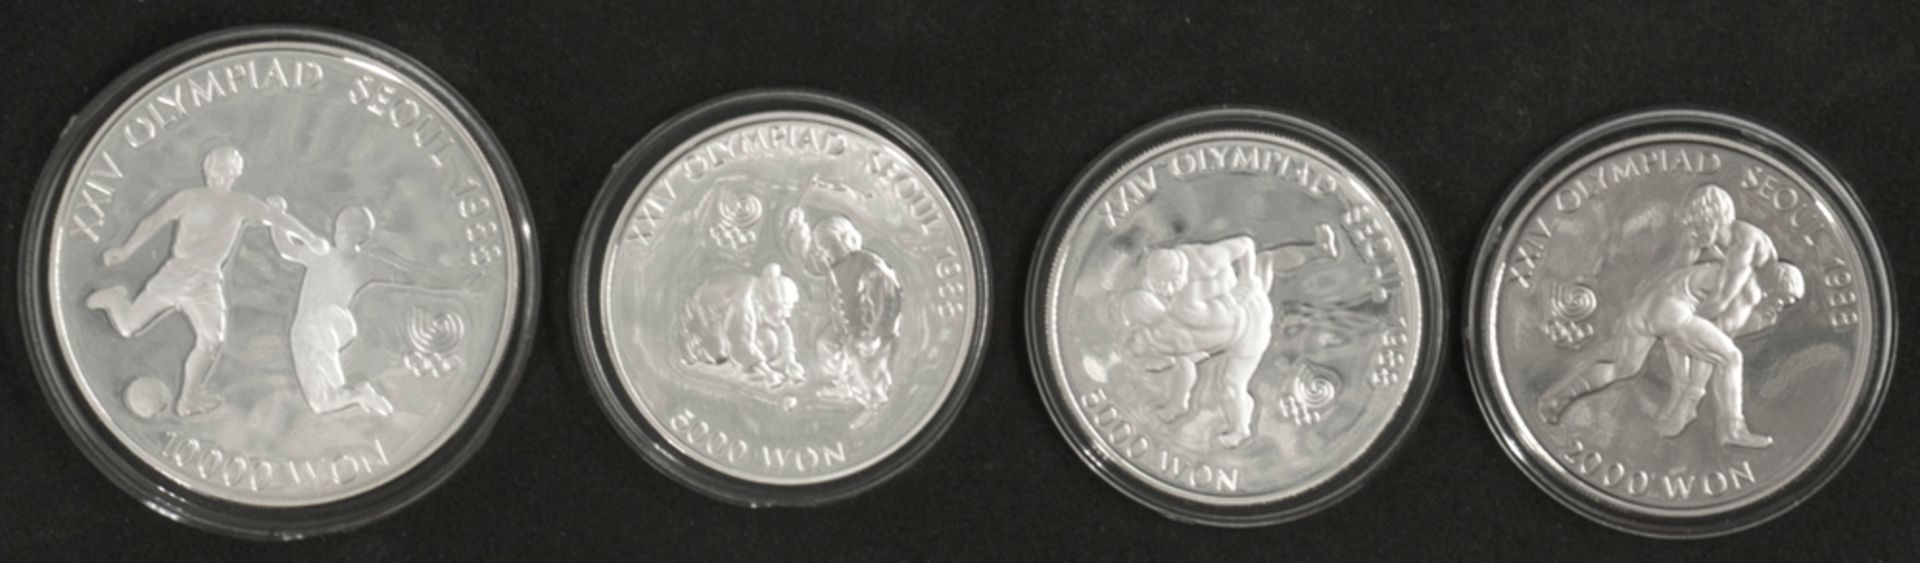 Korea, 1 x 10000 Won - Silbermünze, 2 x 5000 Won - Silbermünzen und 1 x 5000 Won - Münze, Cu/Ni.